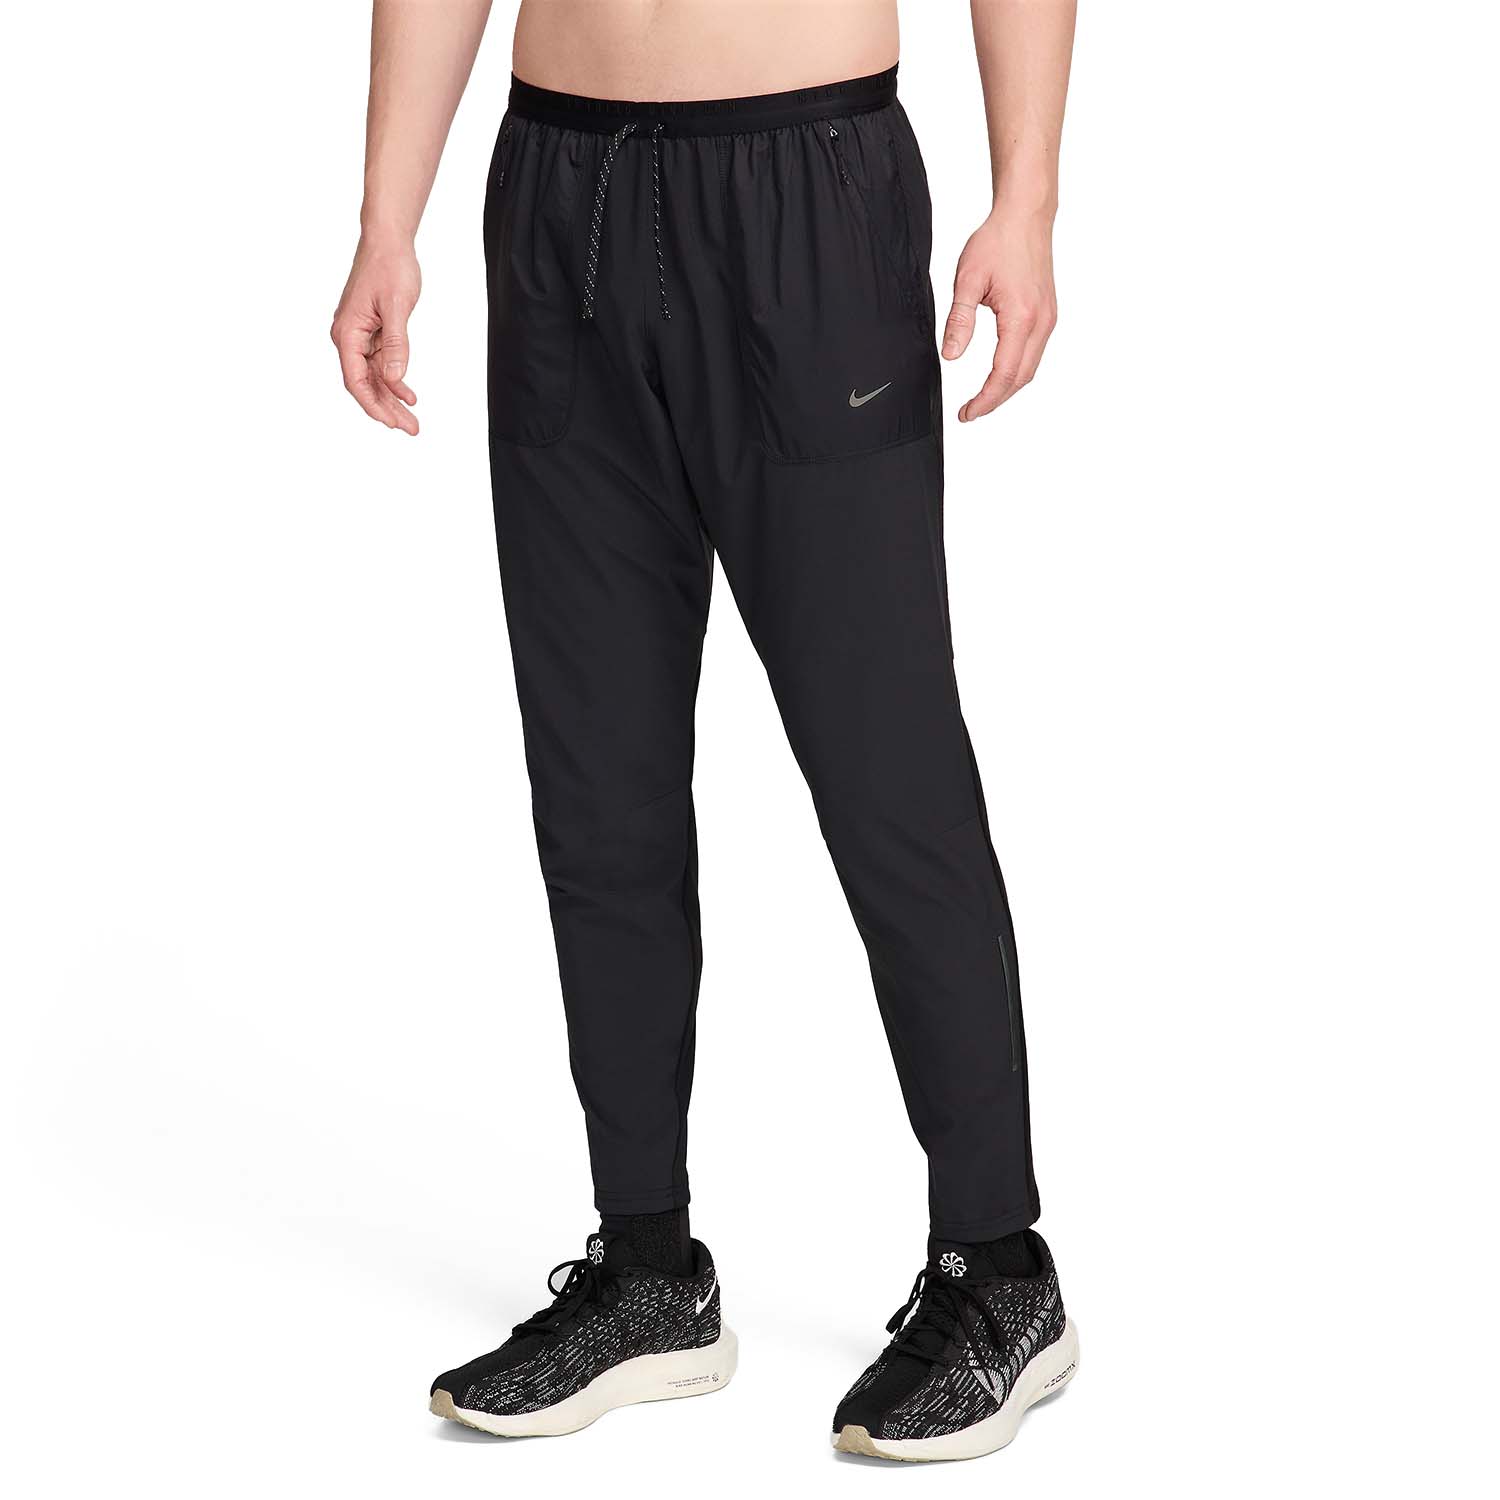 Nike Dri-FIT ADV Pantalones - Black/Blkref